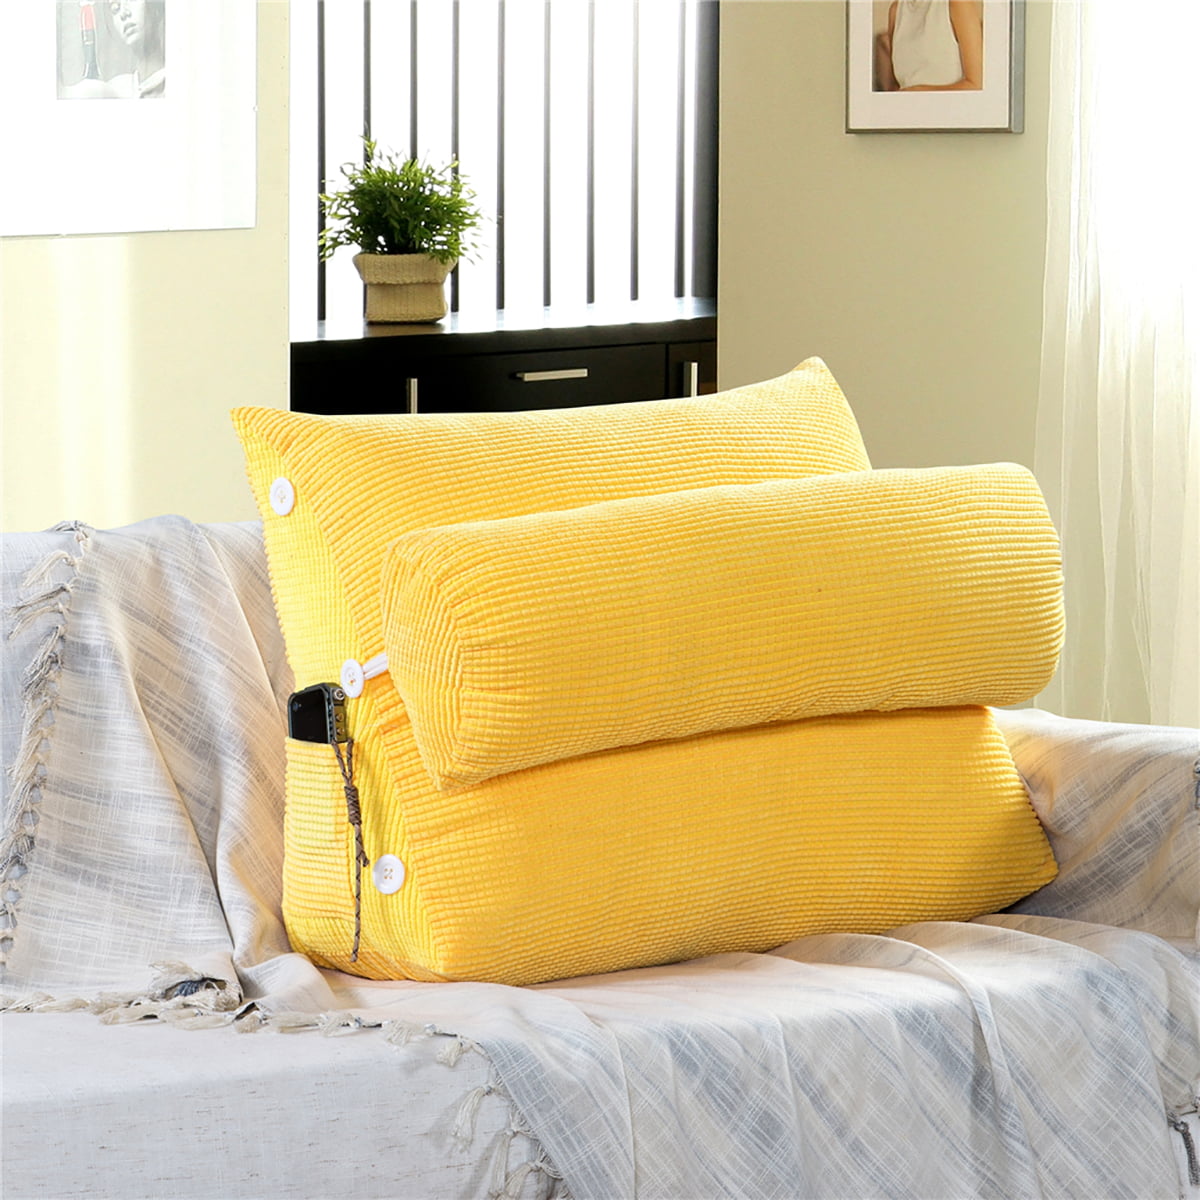 60CM Triangular Wedge Back Pillow Rest Neck Home Sofa Lumbar Cushion Yellow US 